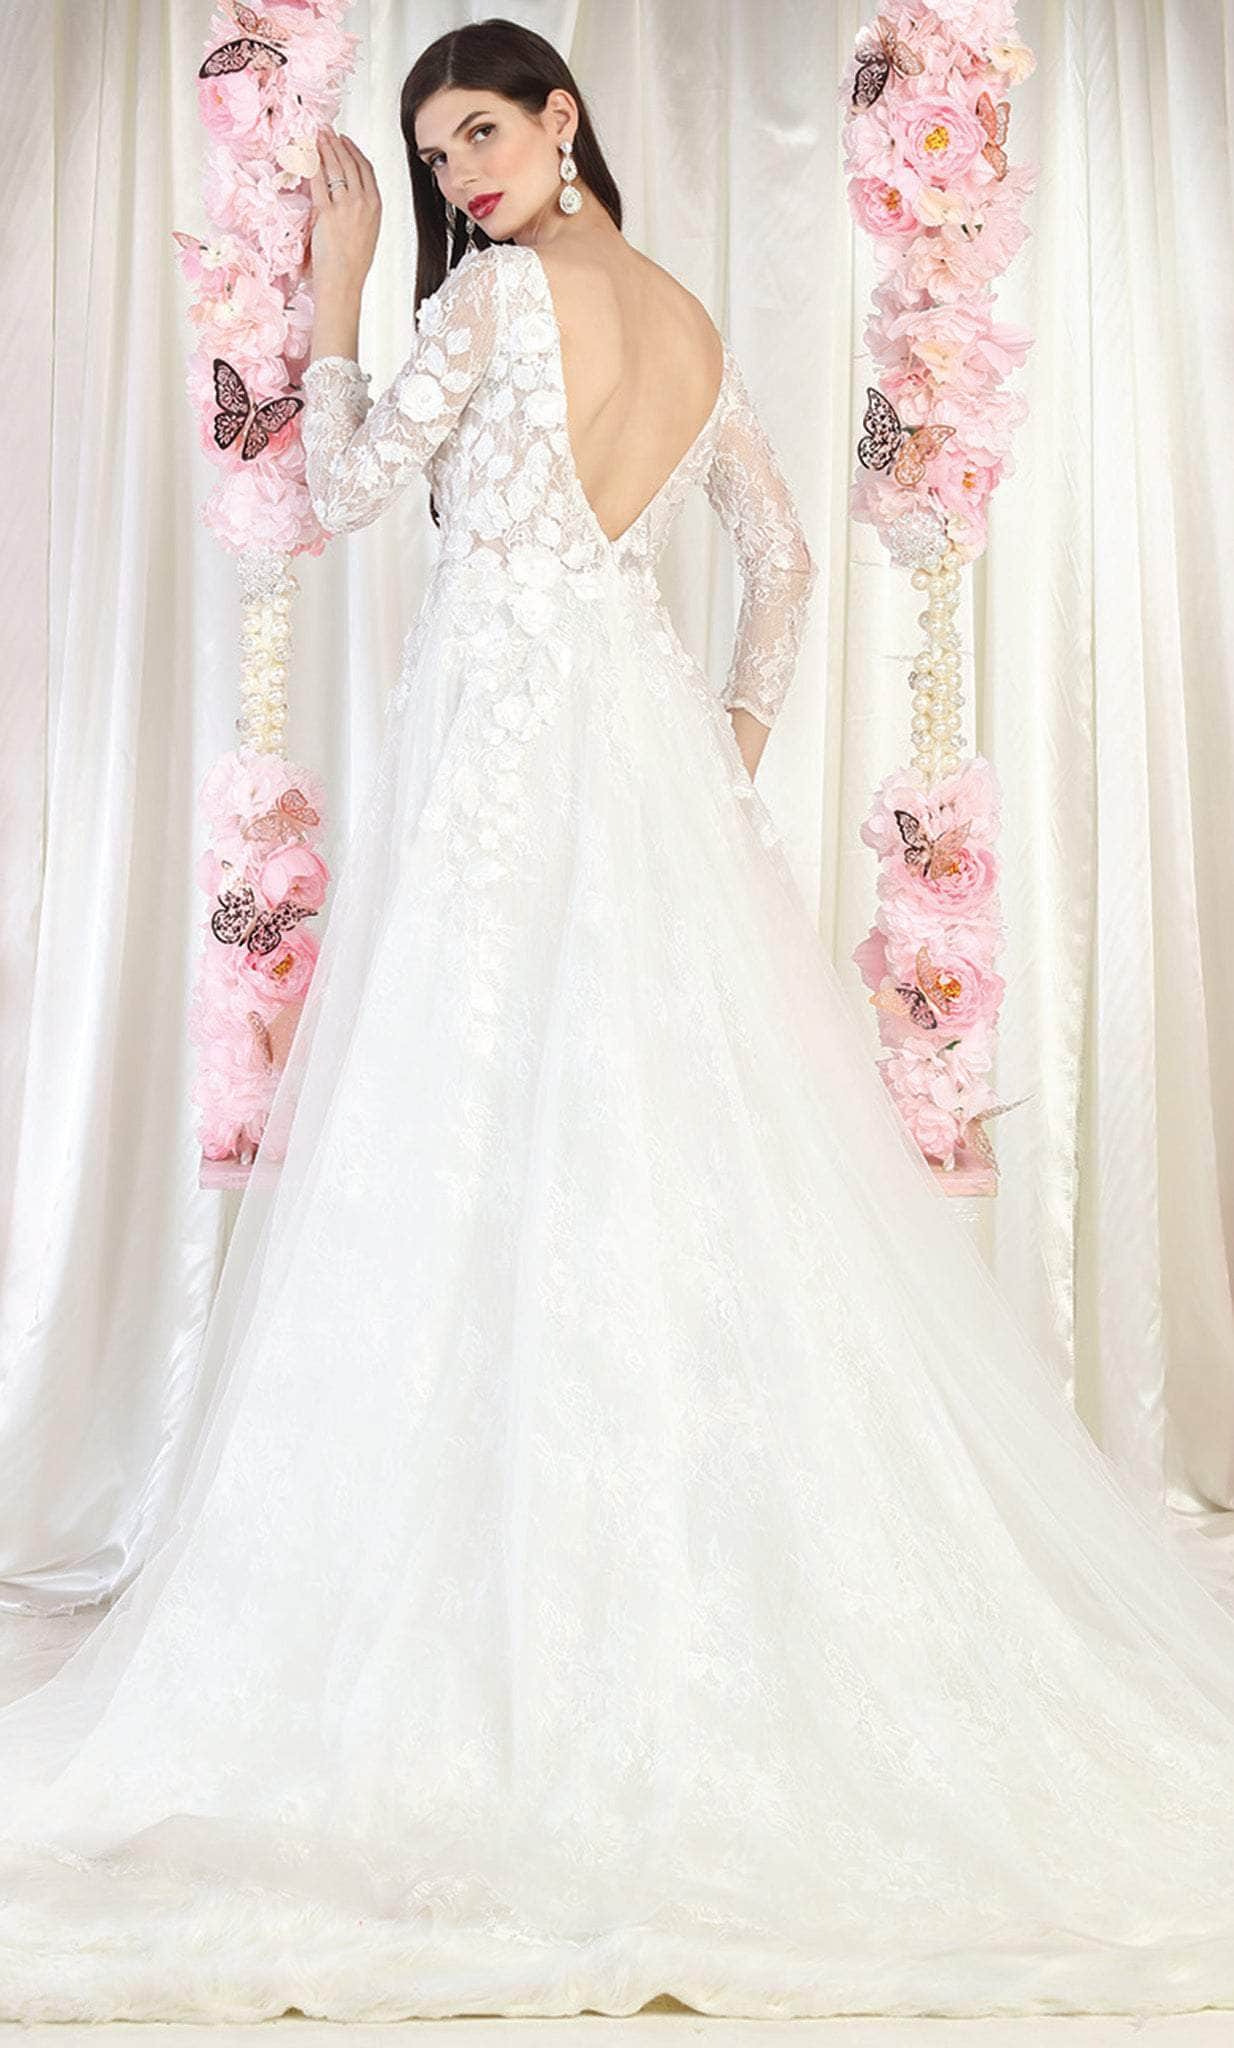 May Queen RQ7996 - Long Sleeve V Neck Dress Bridal Dresses